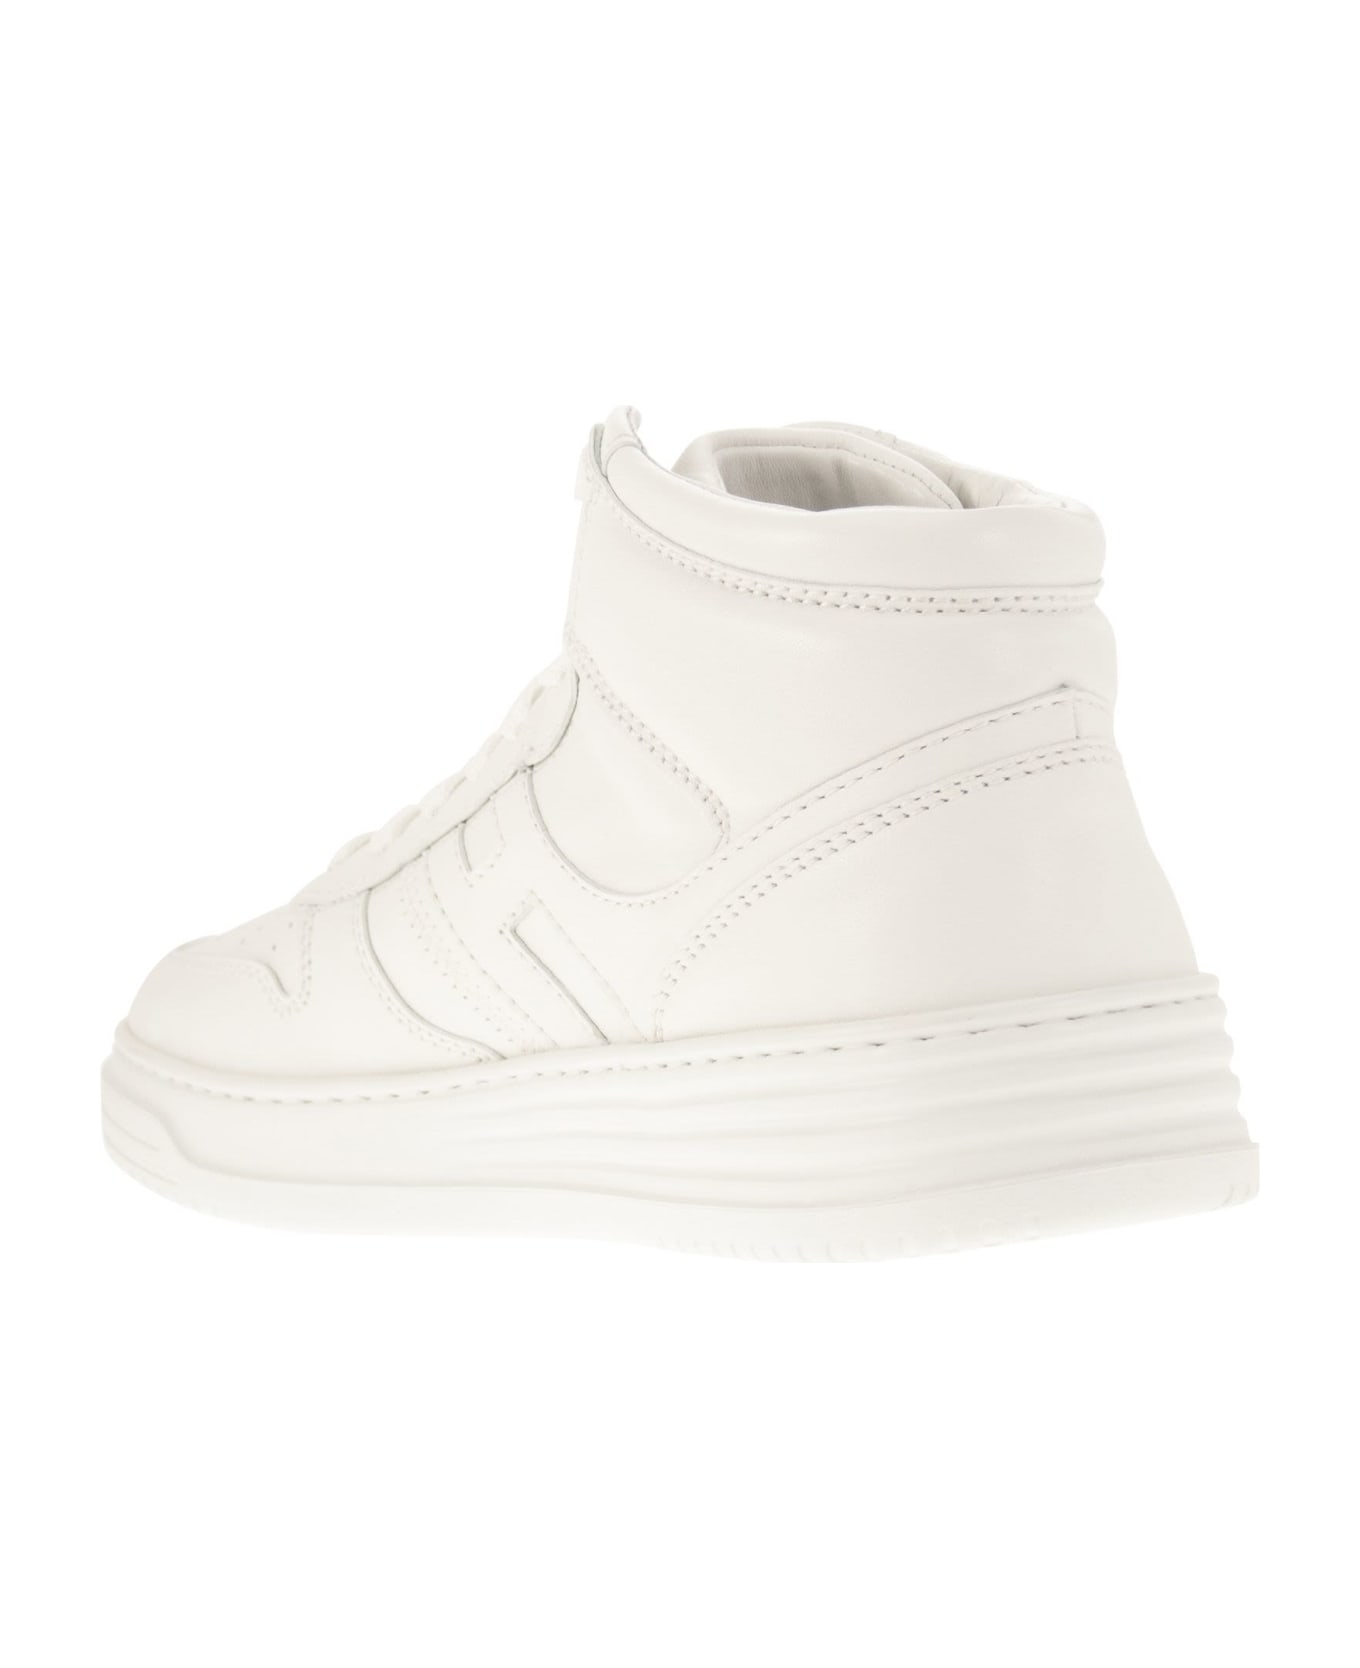 Hogan White Leather Sneakers - White スニーカー